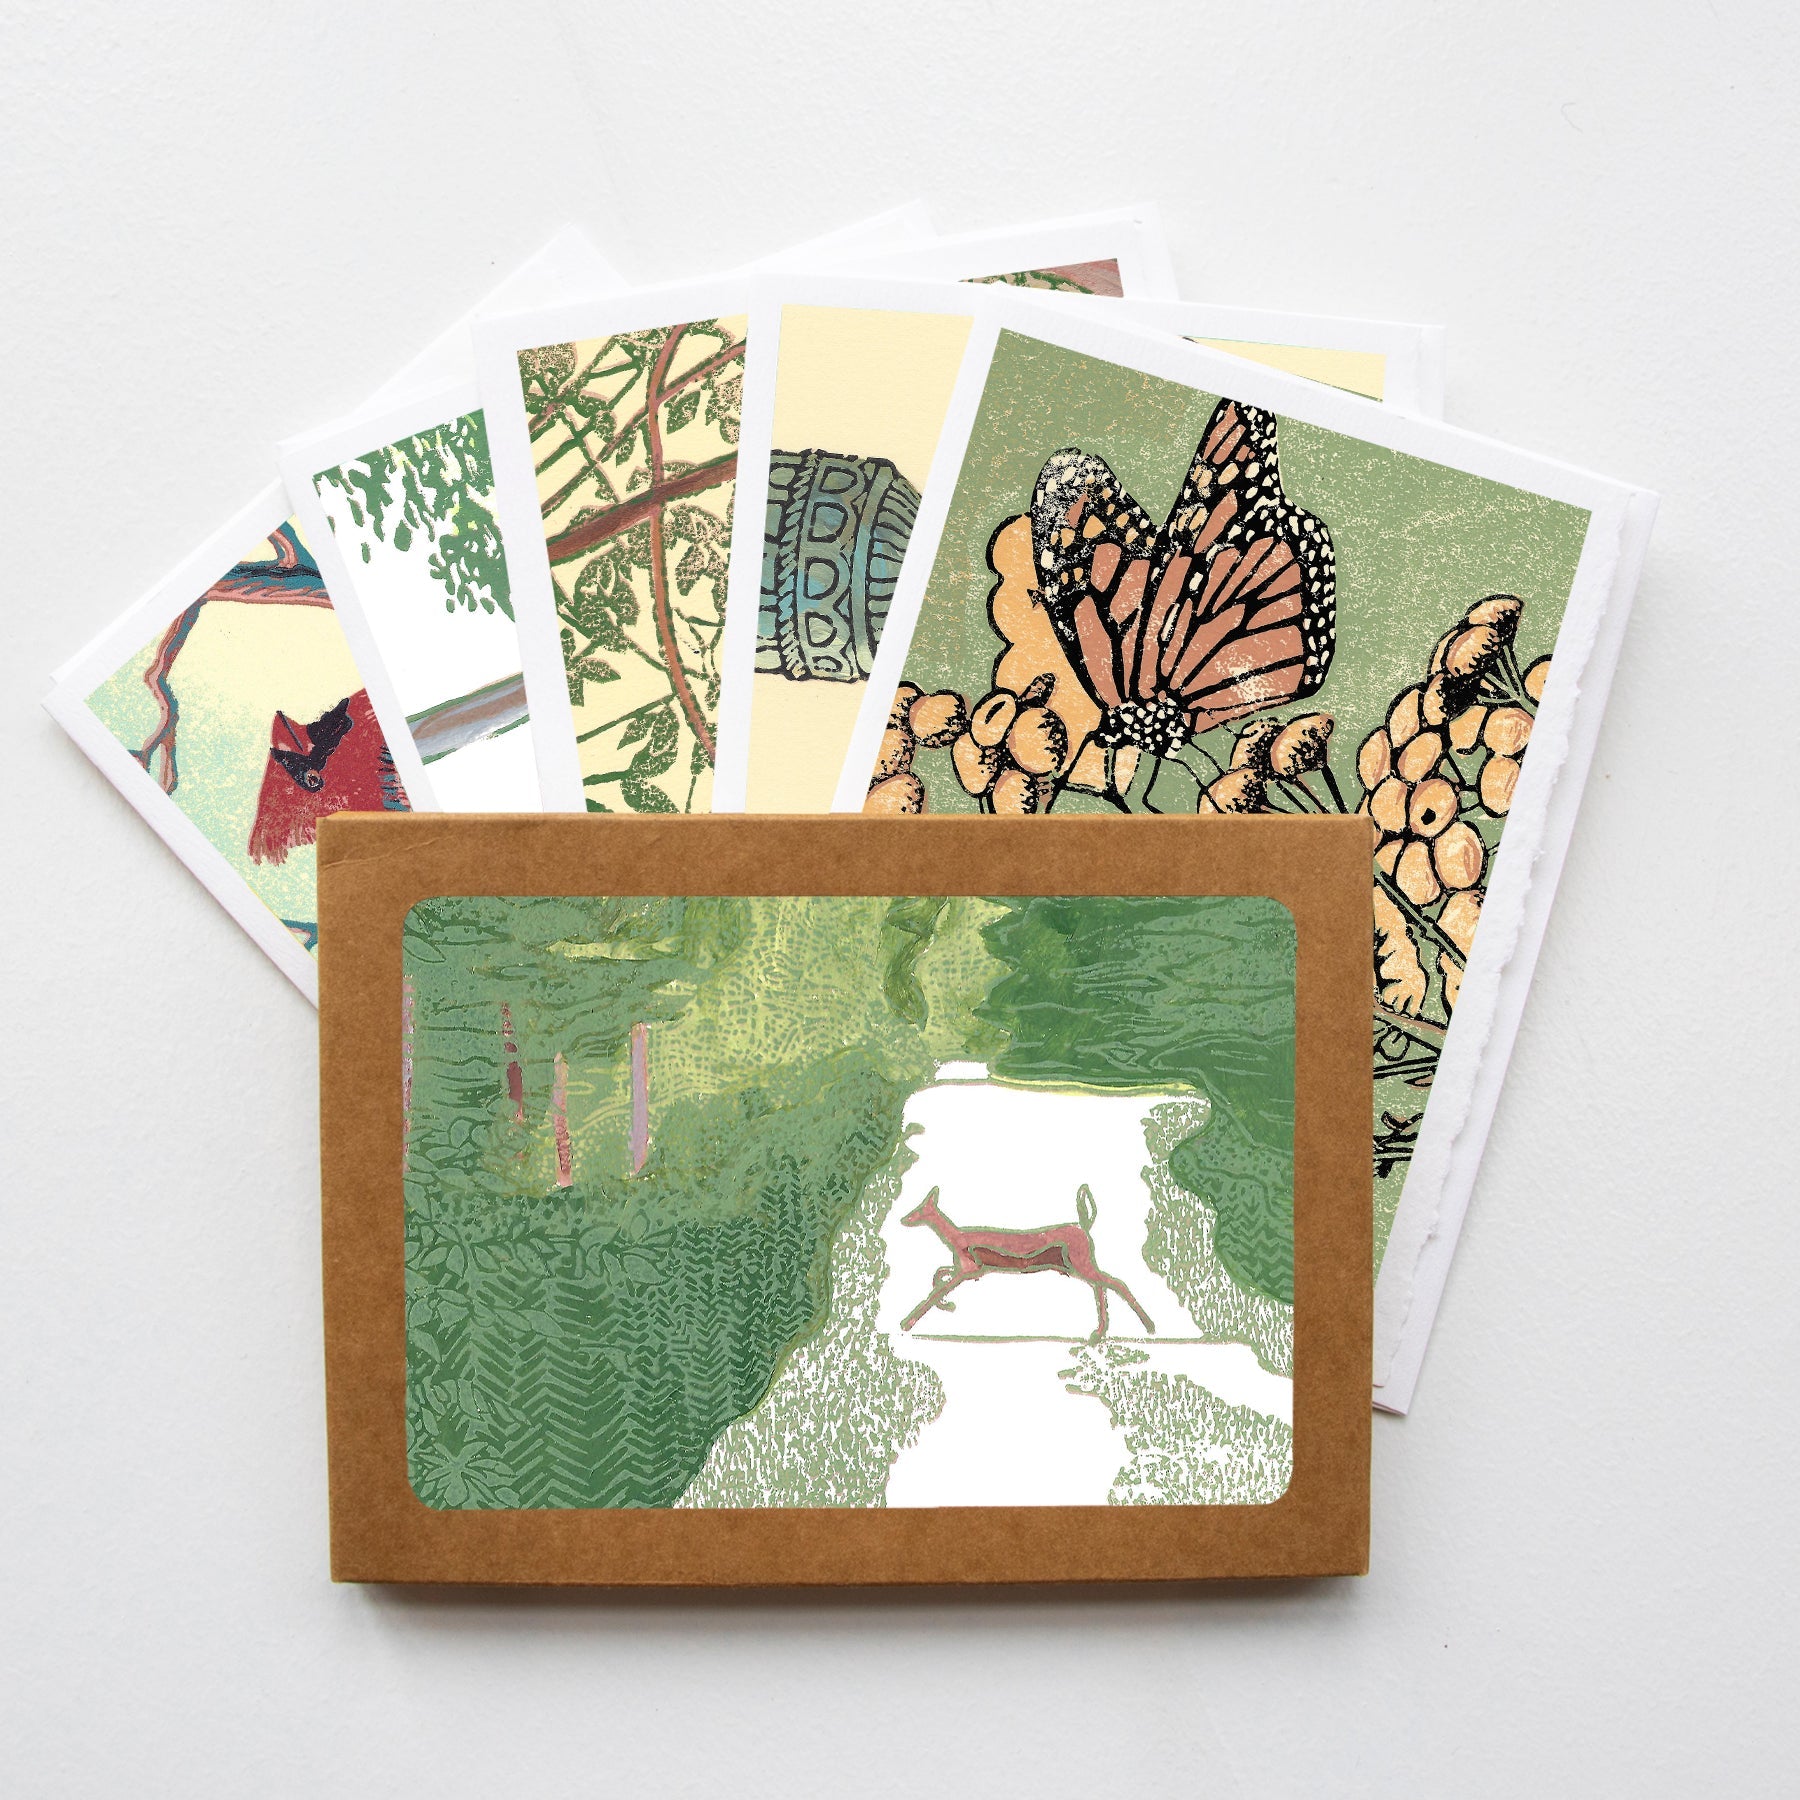 A casually elegant card set featuring digital reproductions of Michigan wildlife block print designs by Natalia Wohletz of Peninsula Prints.